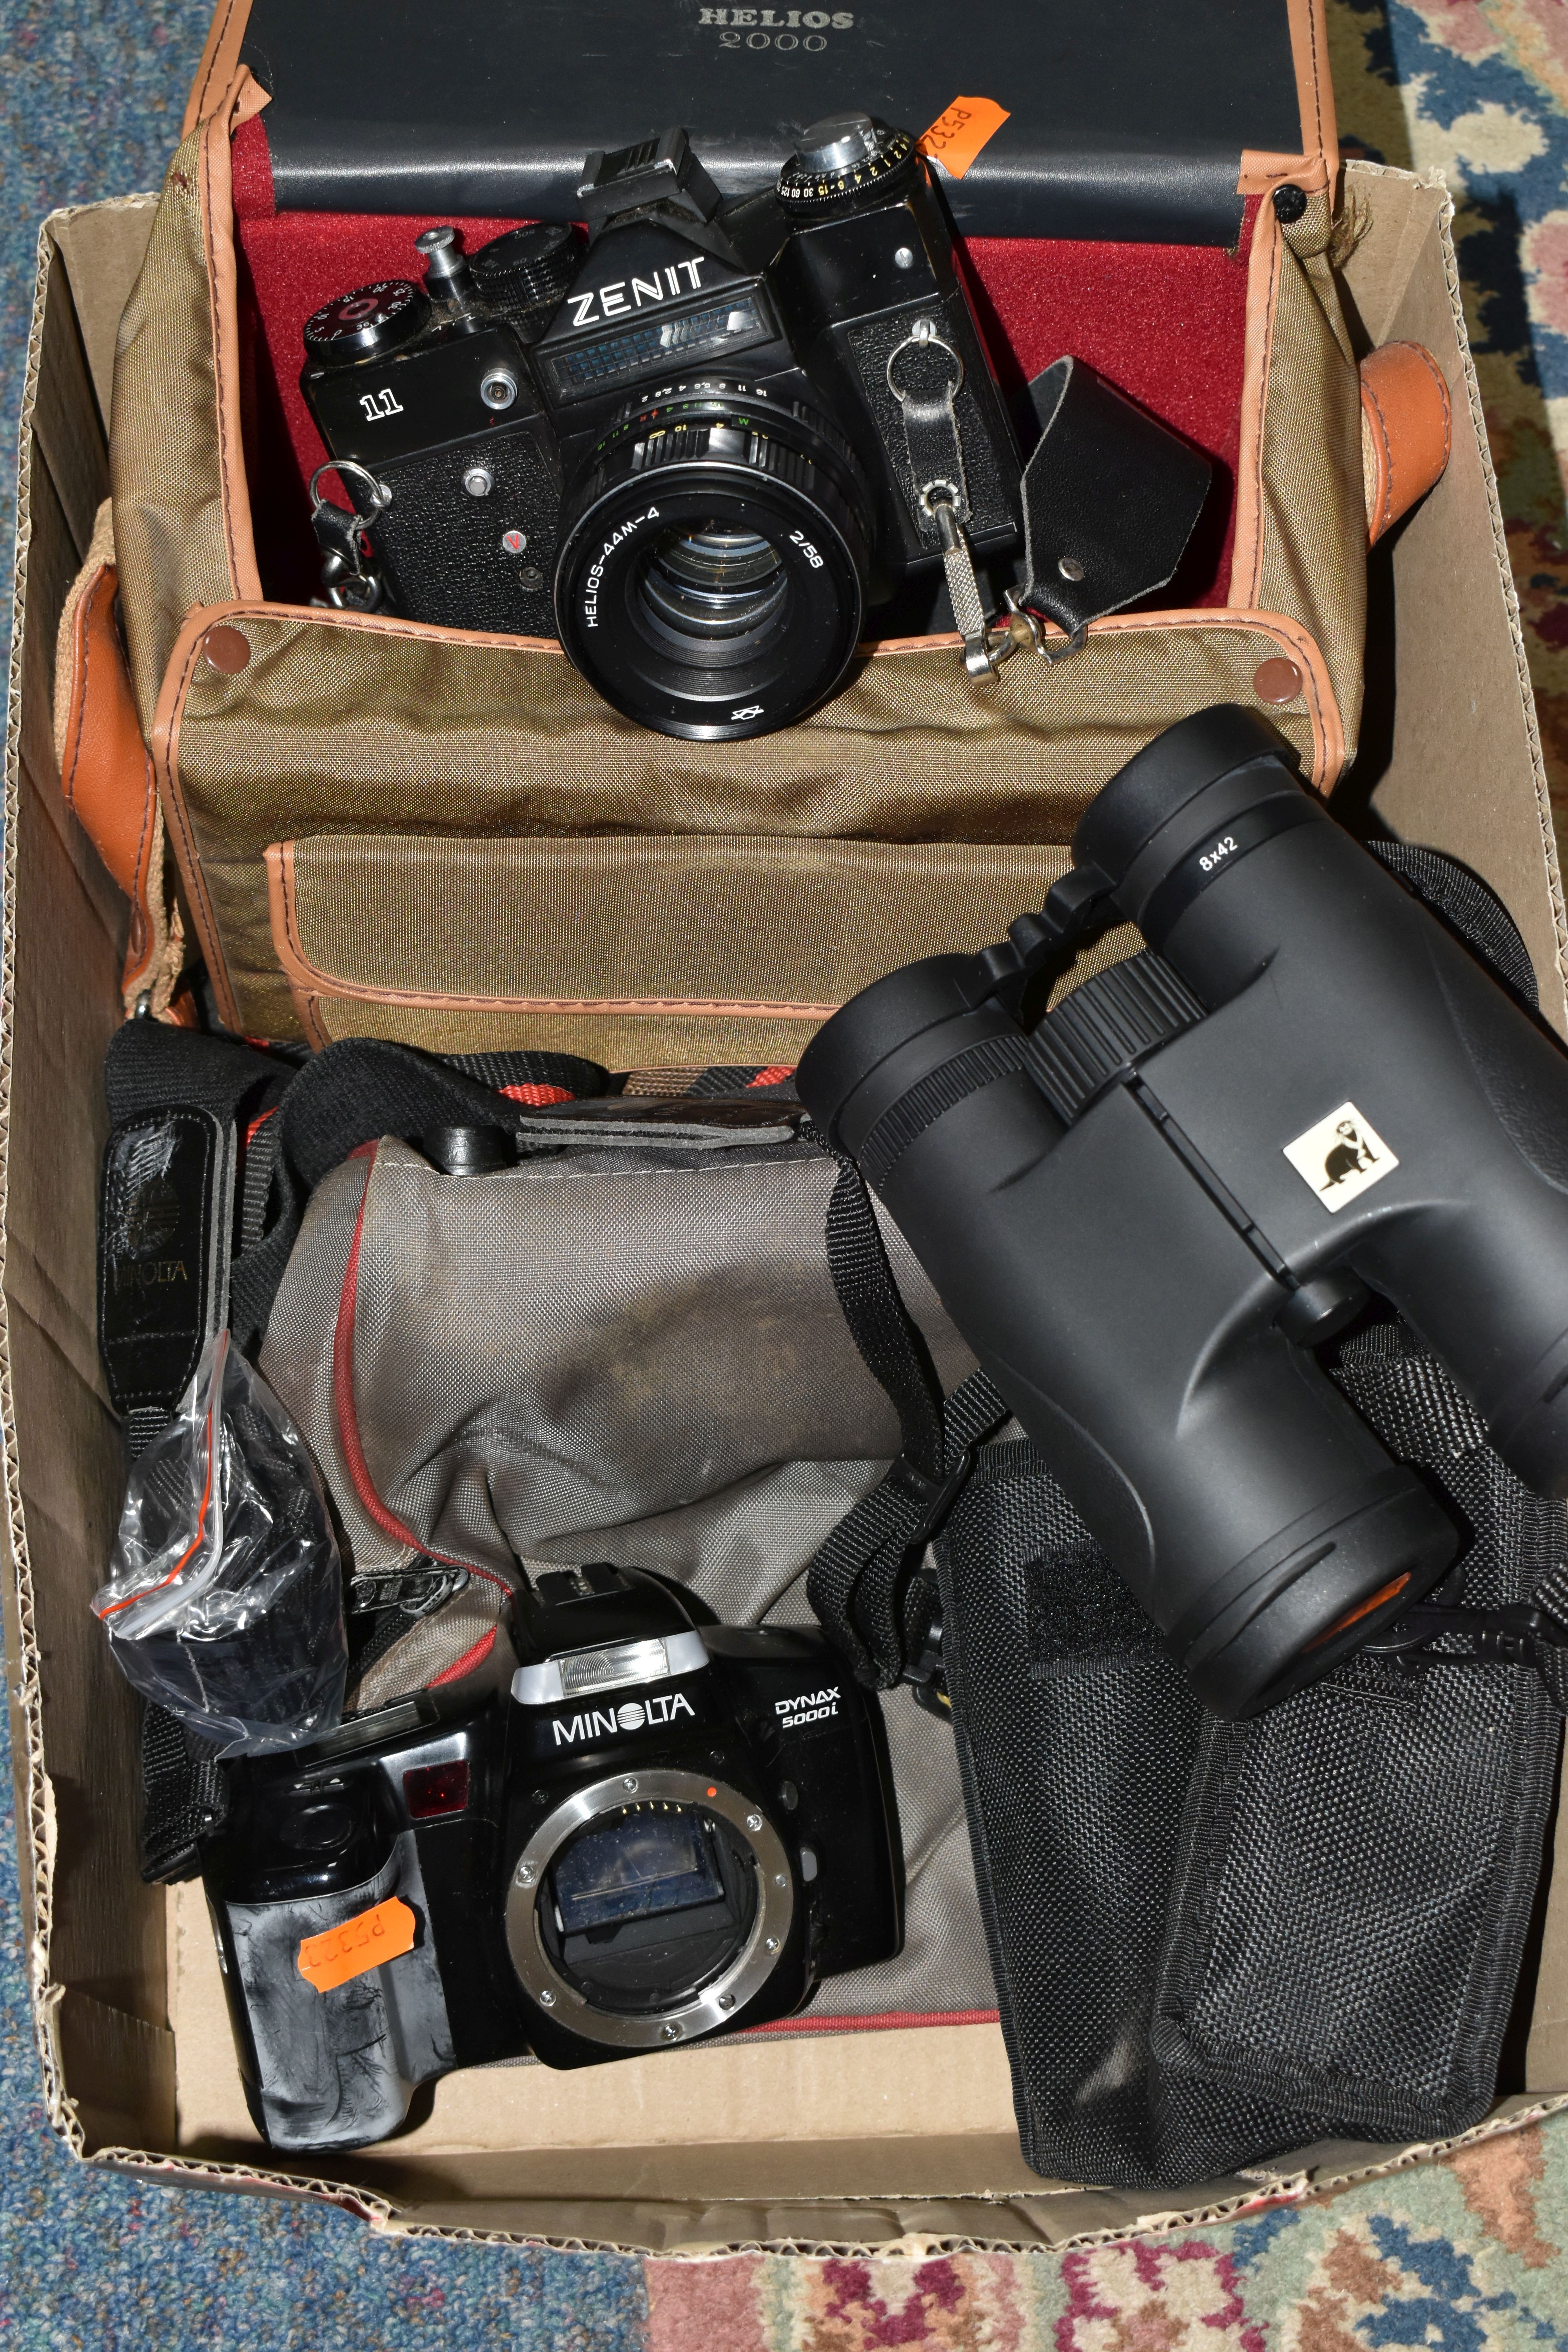 CAMERAS AND BINOCULARS ETC, comprising a Minolta Dynax 5000i SLR camera body, Zenit 11 35mm film SLR